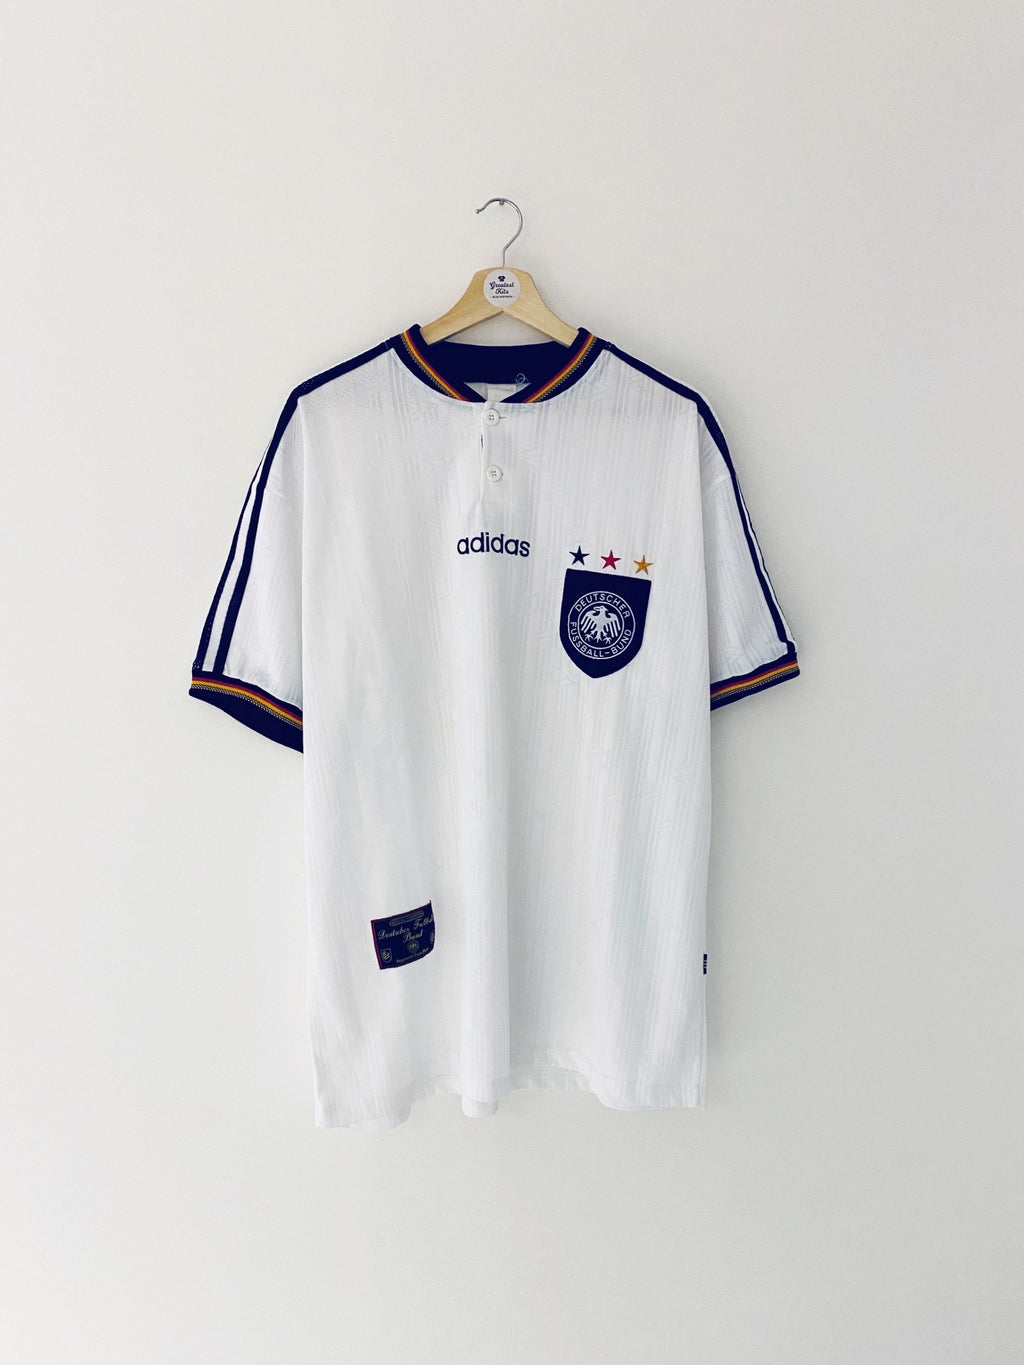 1996/98 Germany Home Shirt (XL) 9/10